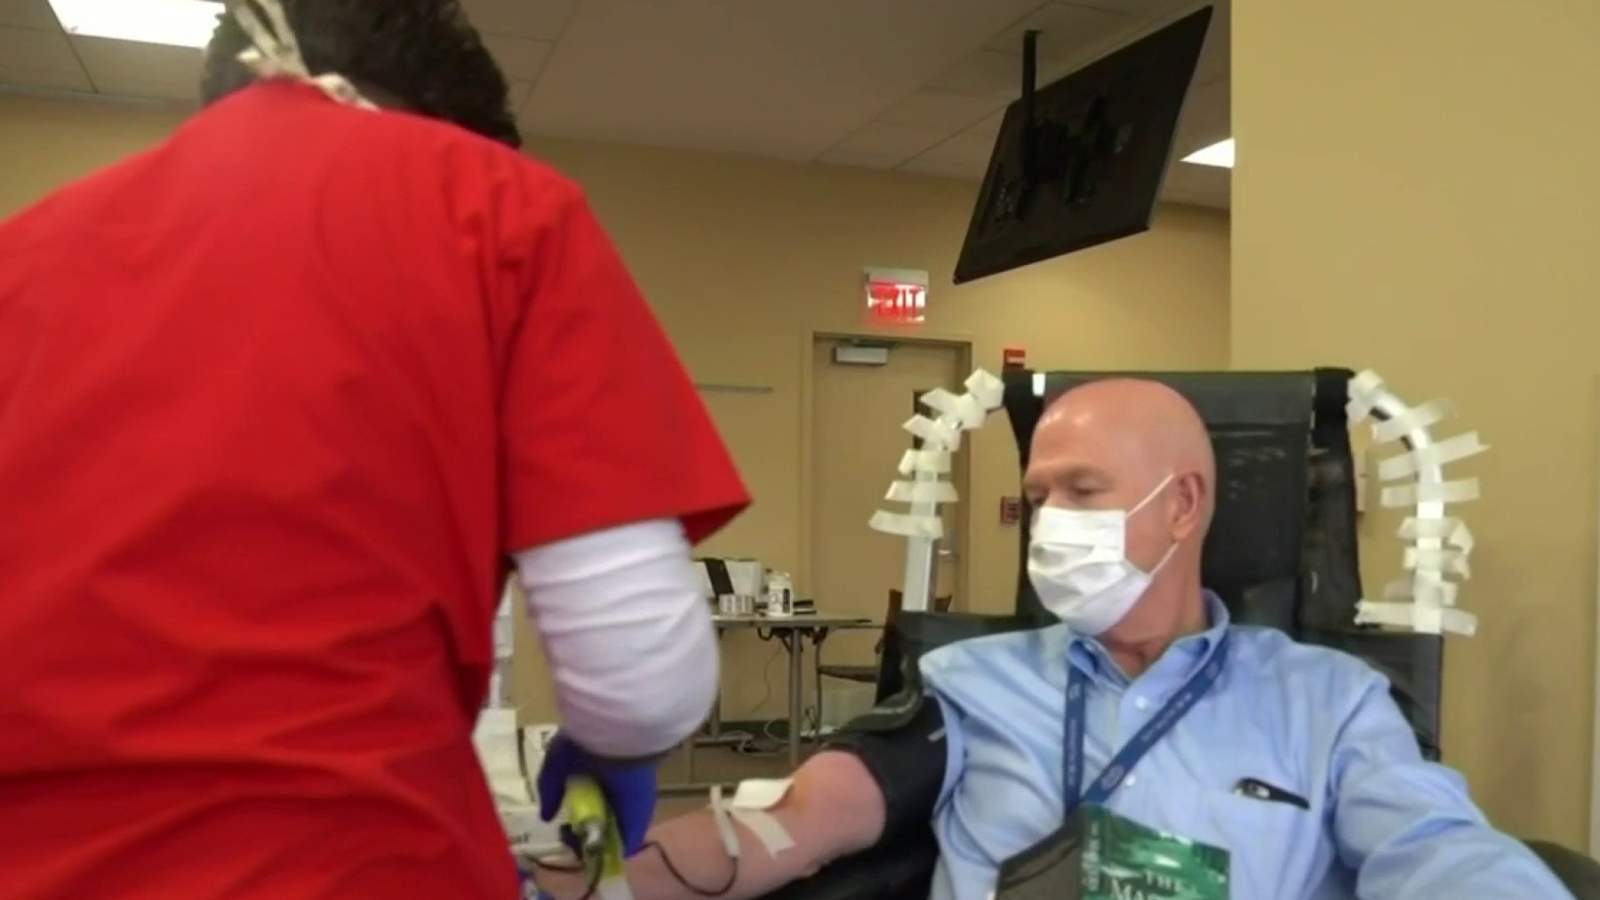 Organization coordinates blood drives in Michigan, across US amid ‘severe shortage’